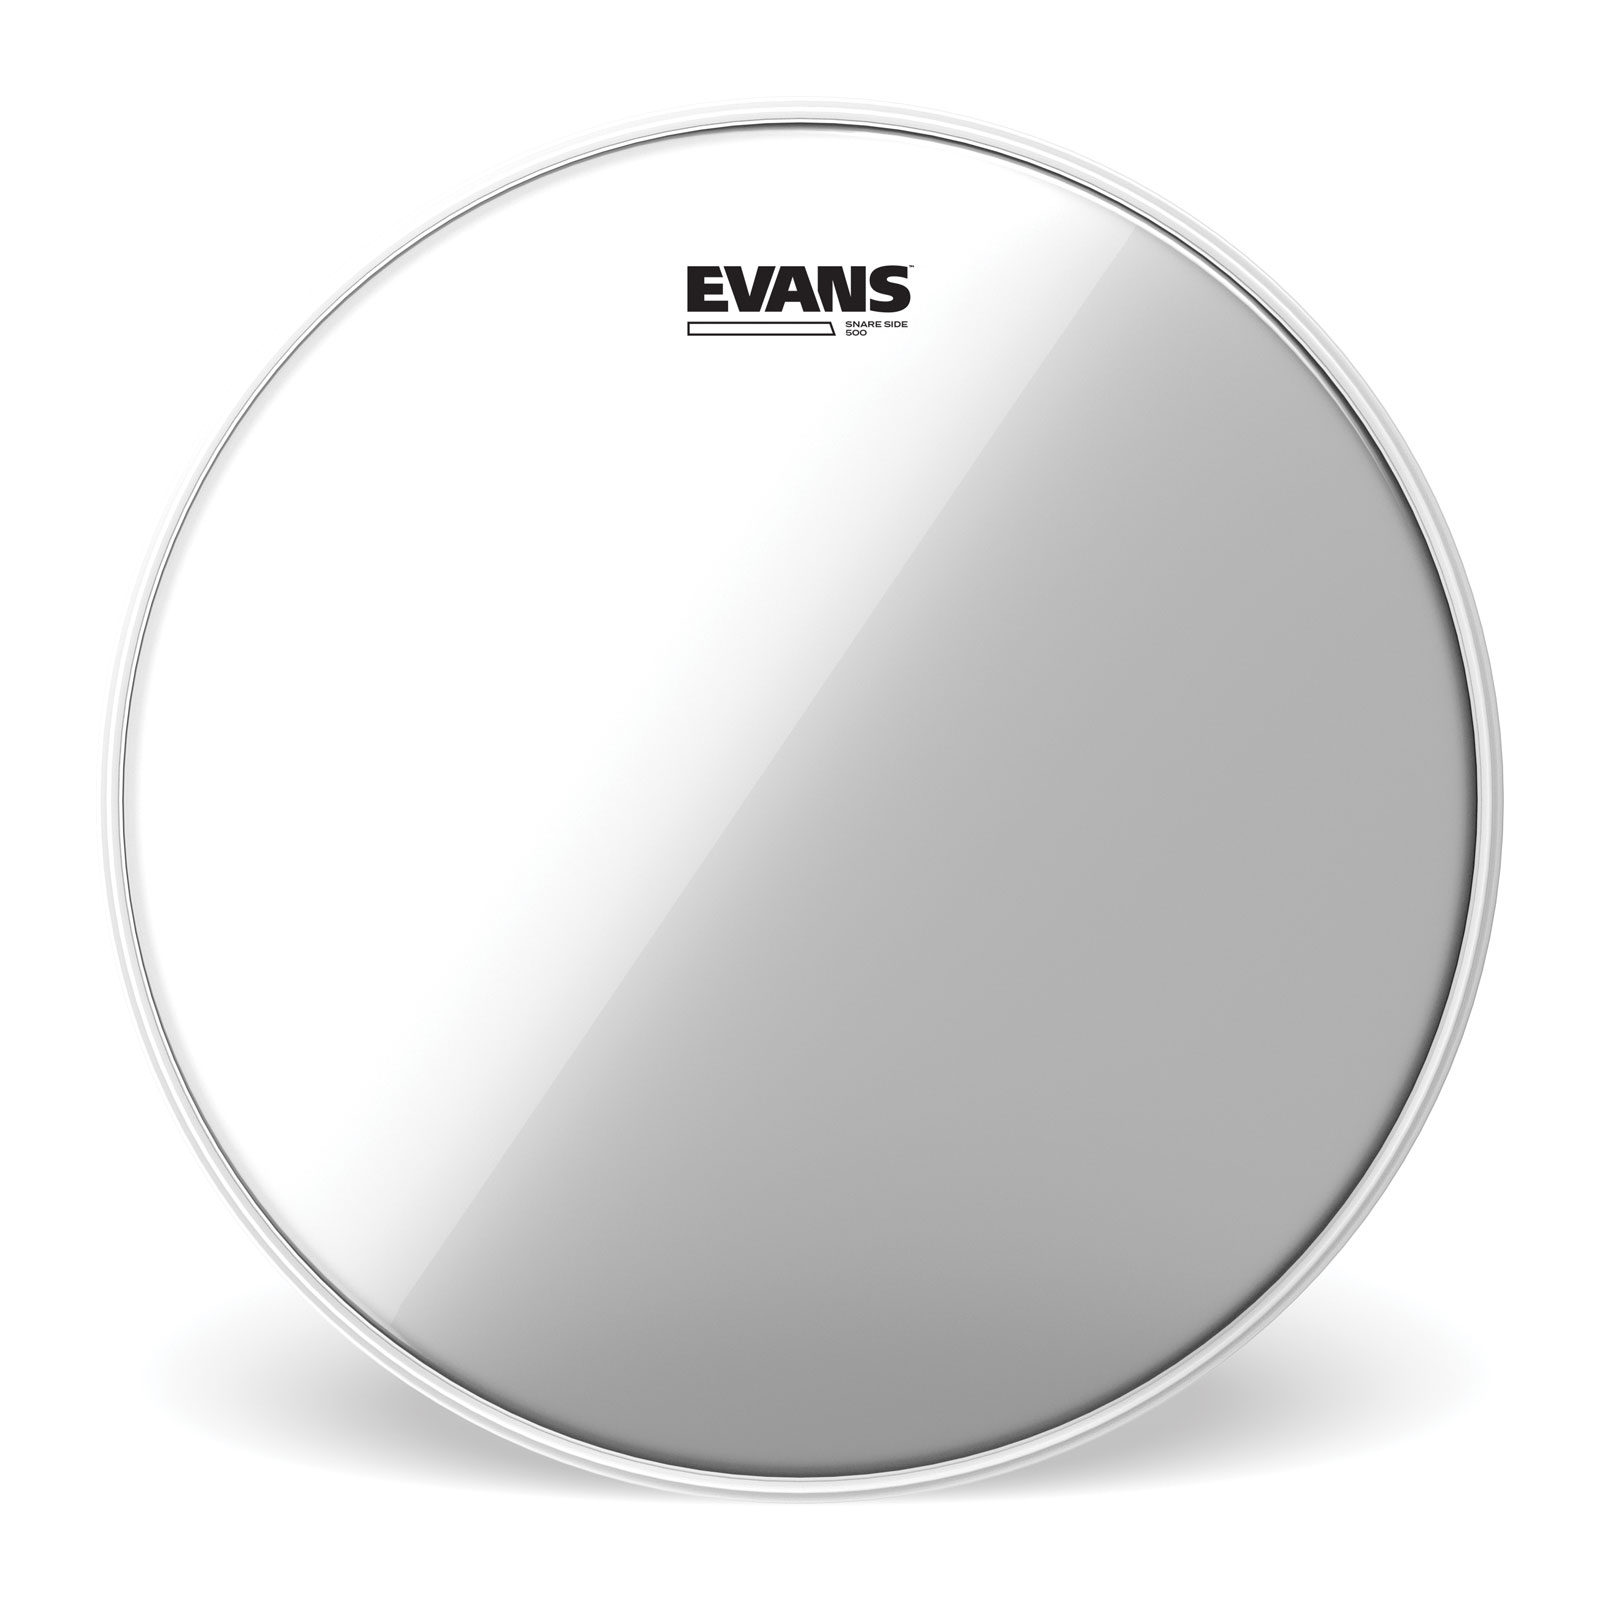 EVANS S14R50 - GENERA 500 14